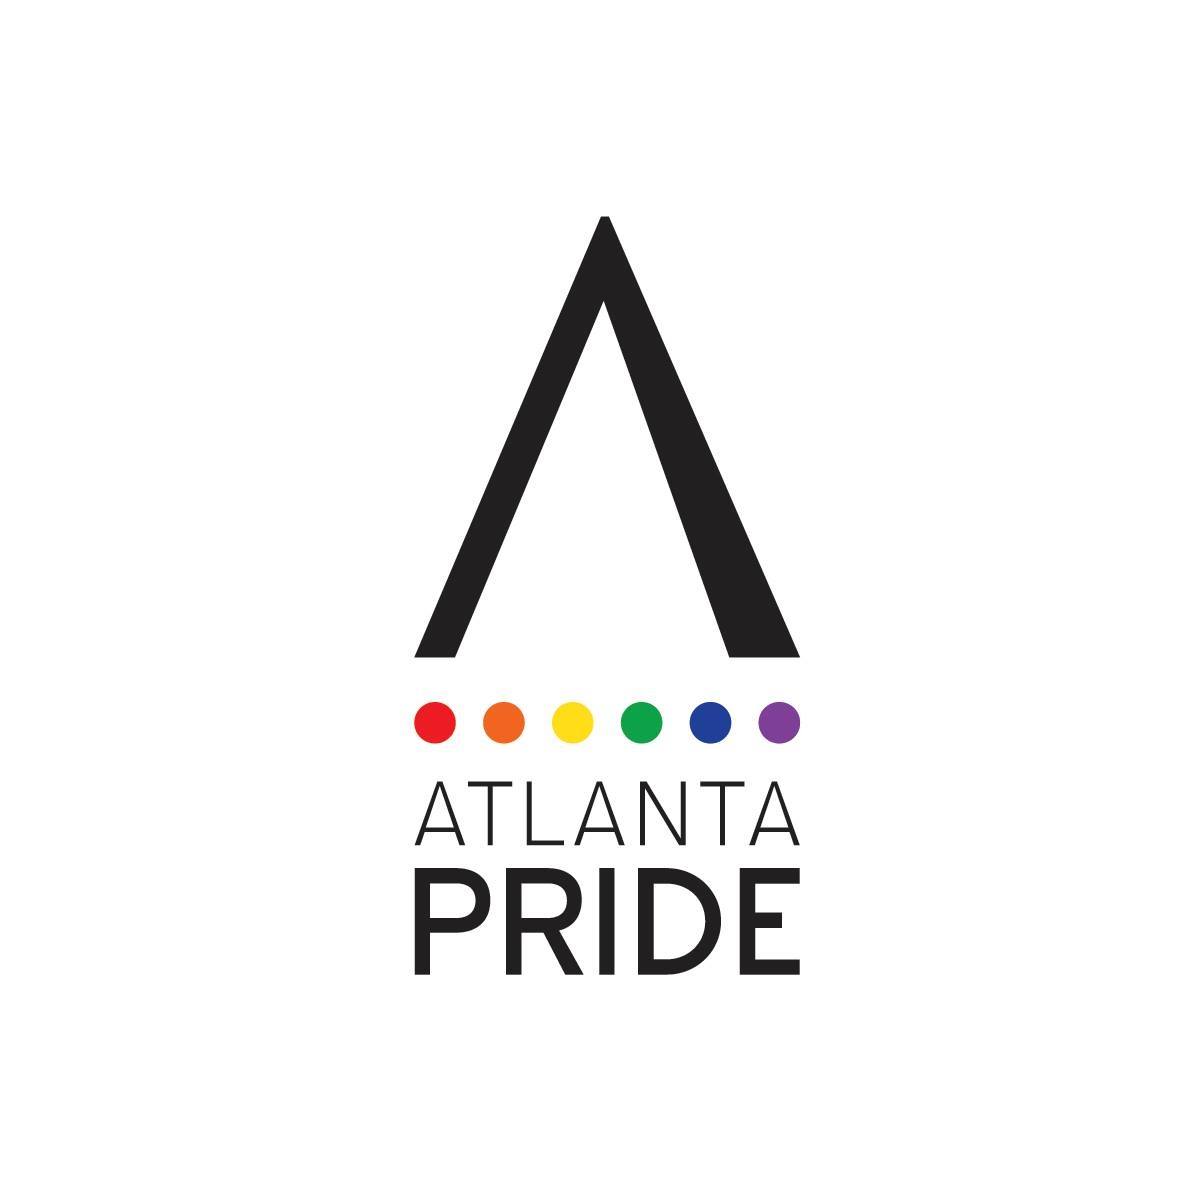 LGBTQ Organization in Georgia - The Atlanta Pride Committee